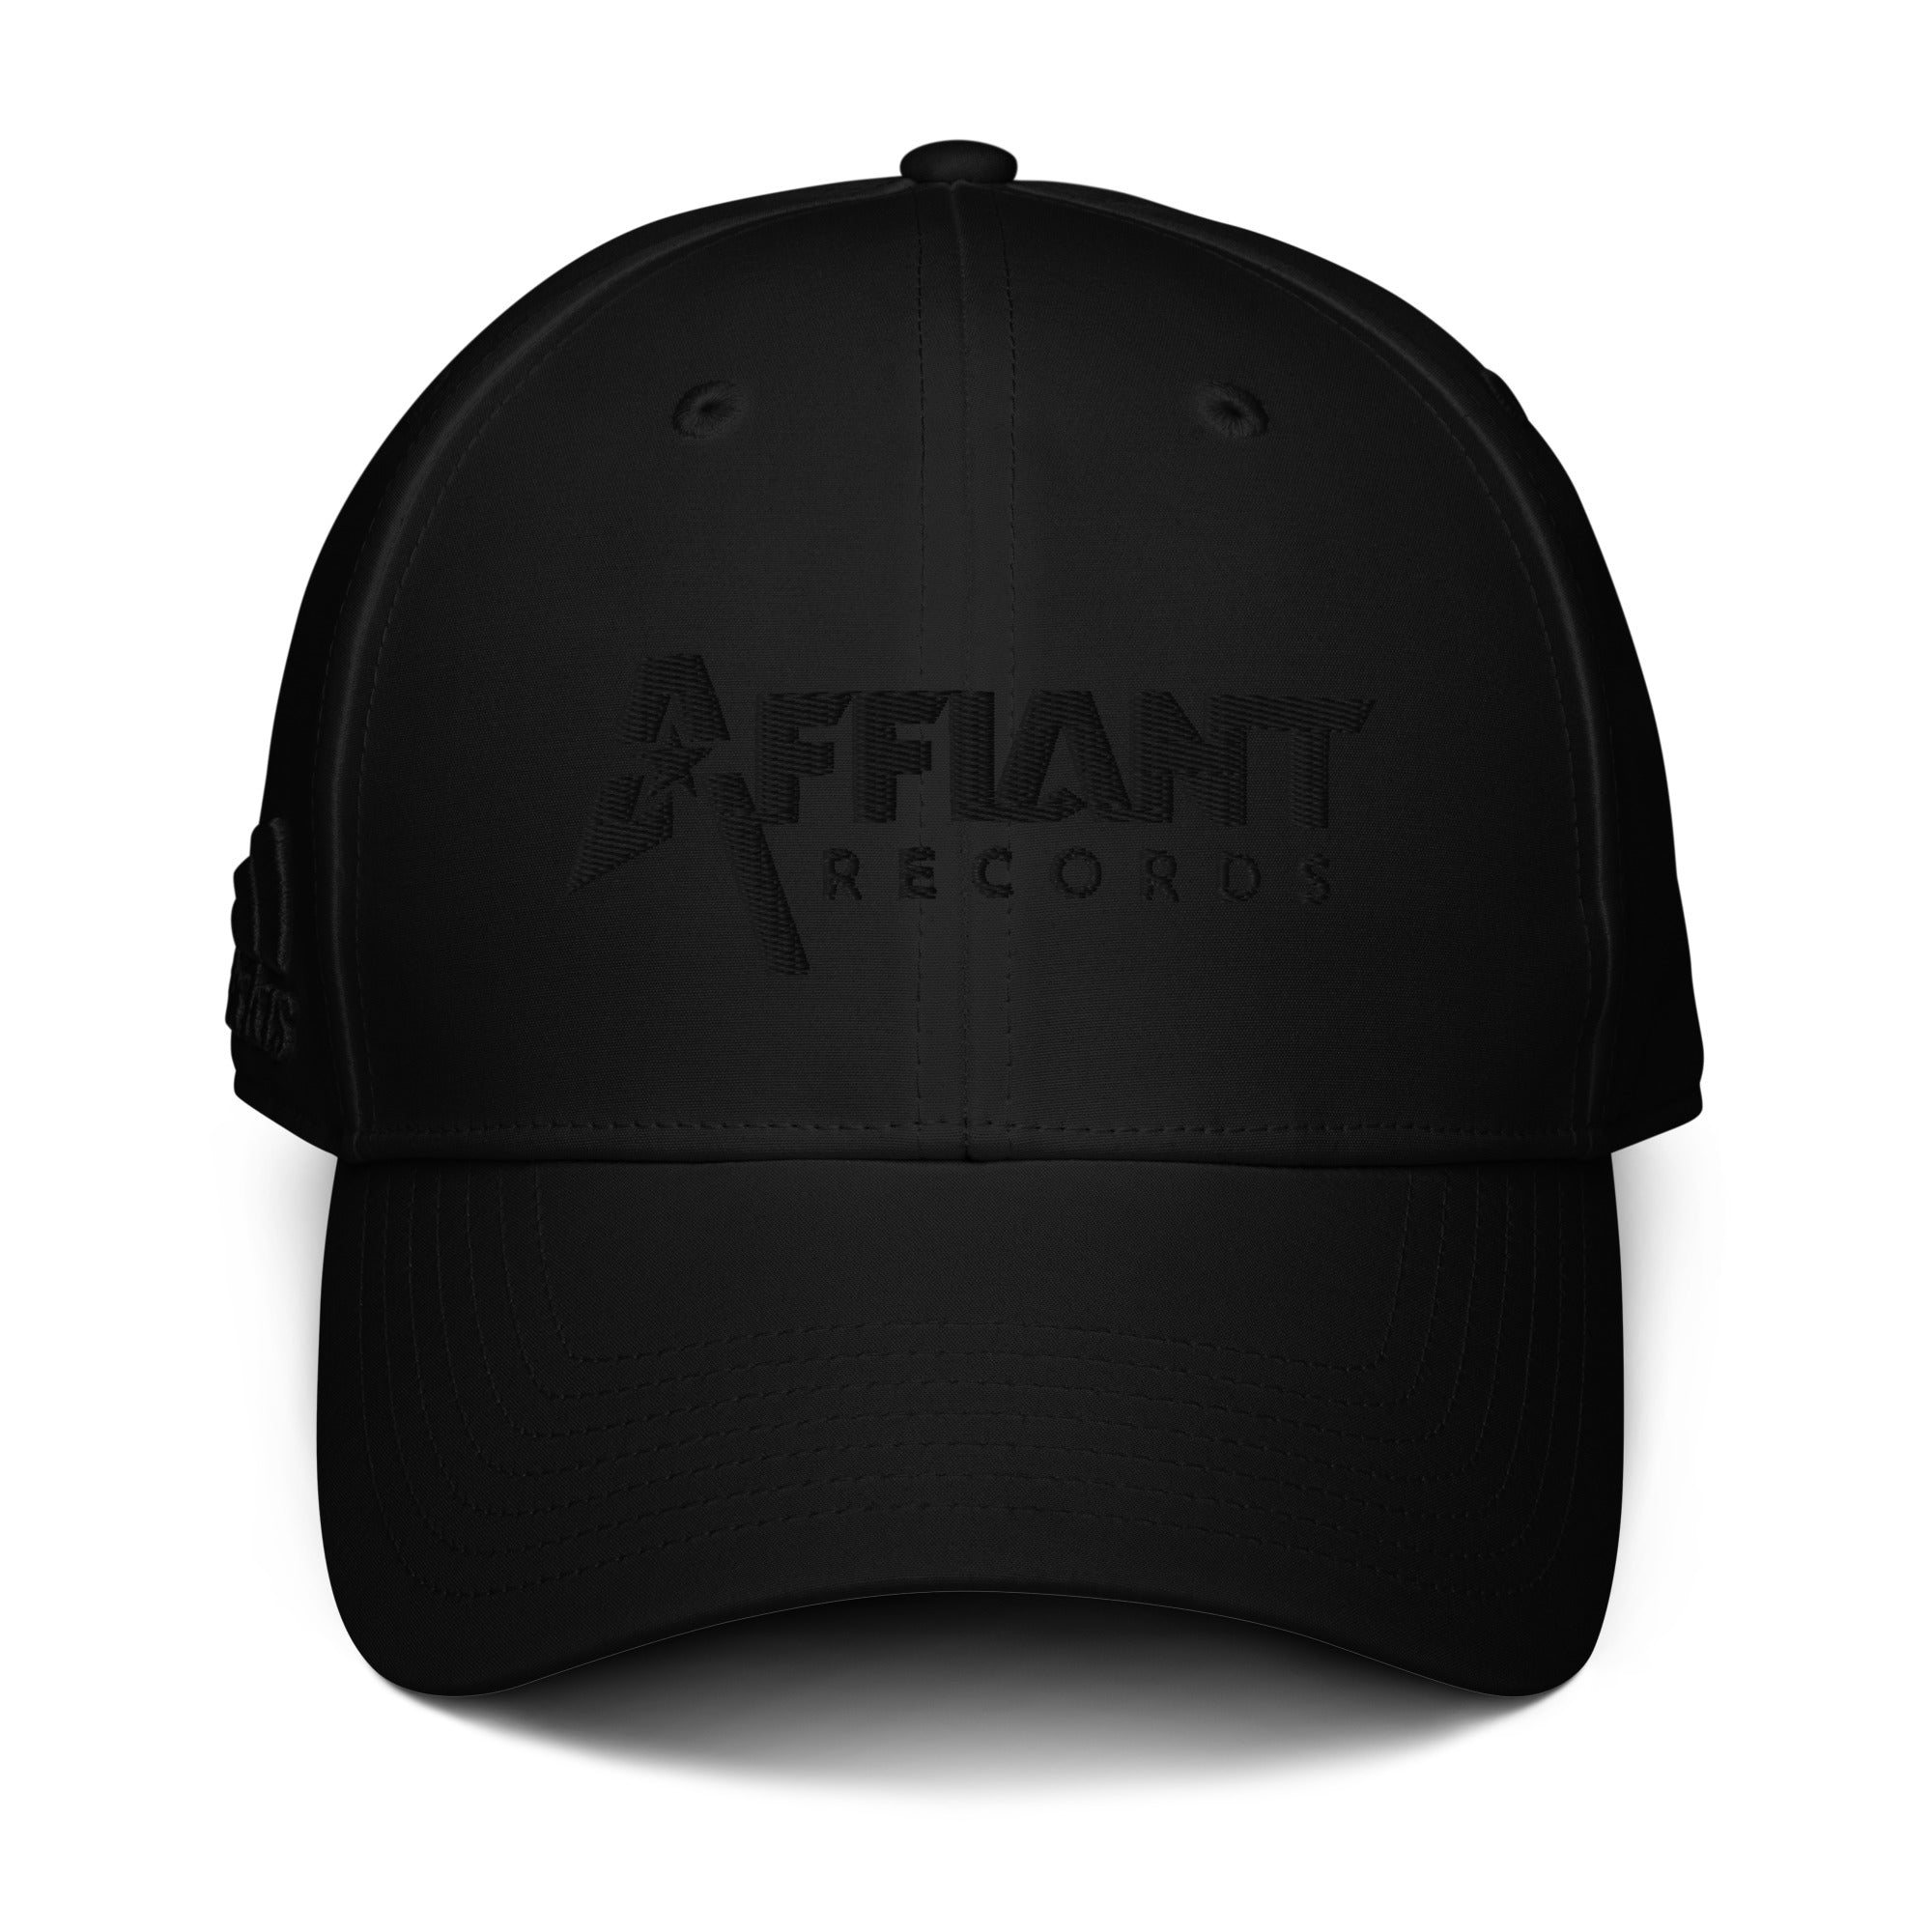 AFFIANT RECORDS - FULL LOGO BLACK ON BLACK ADIDAS DAD HAT